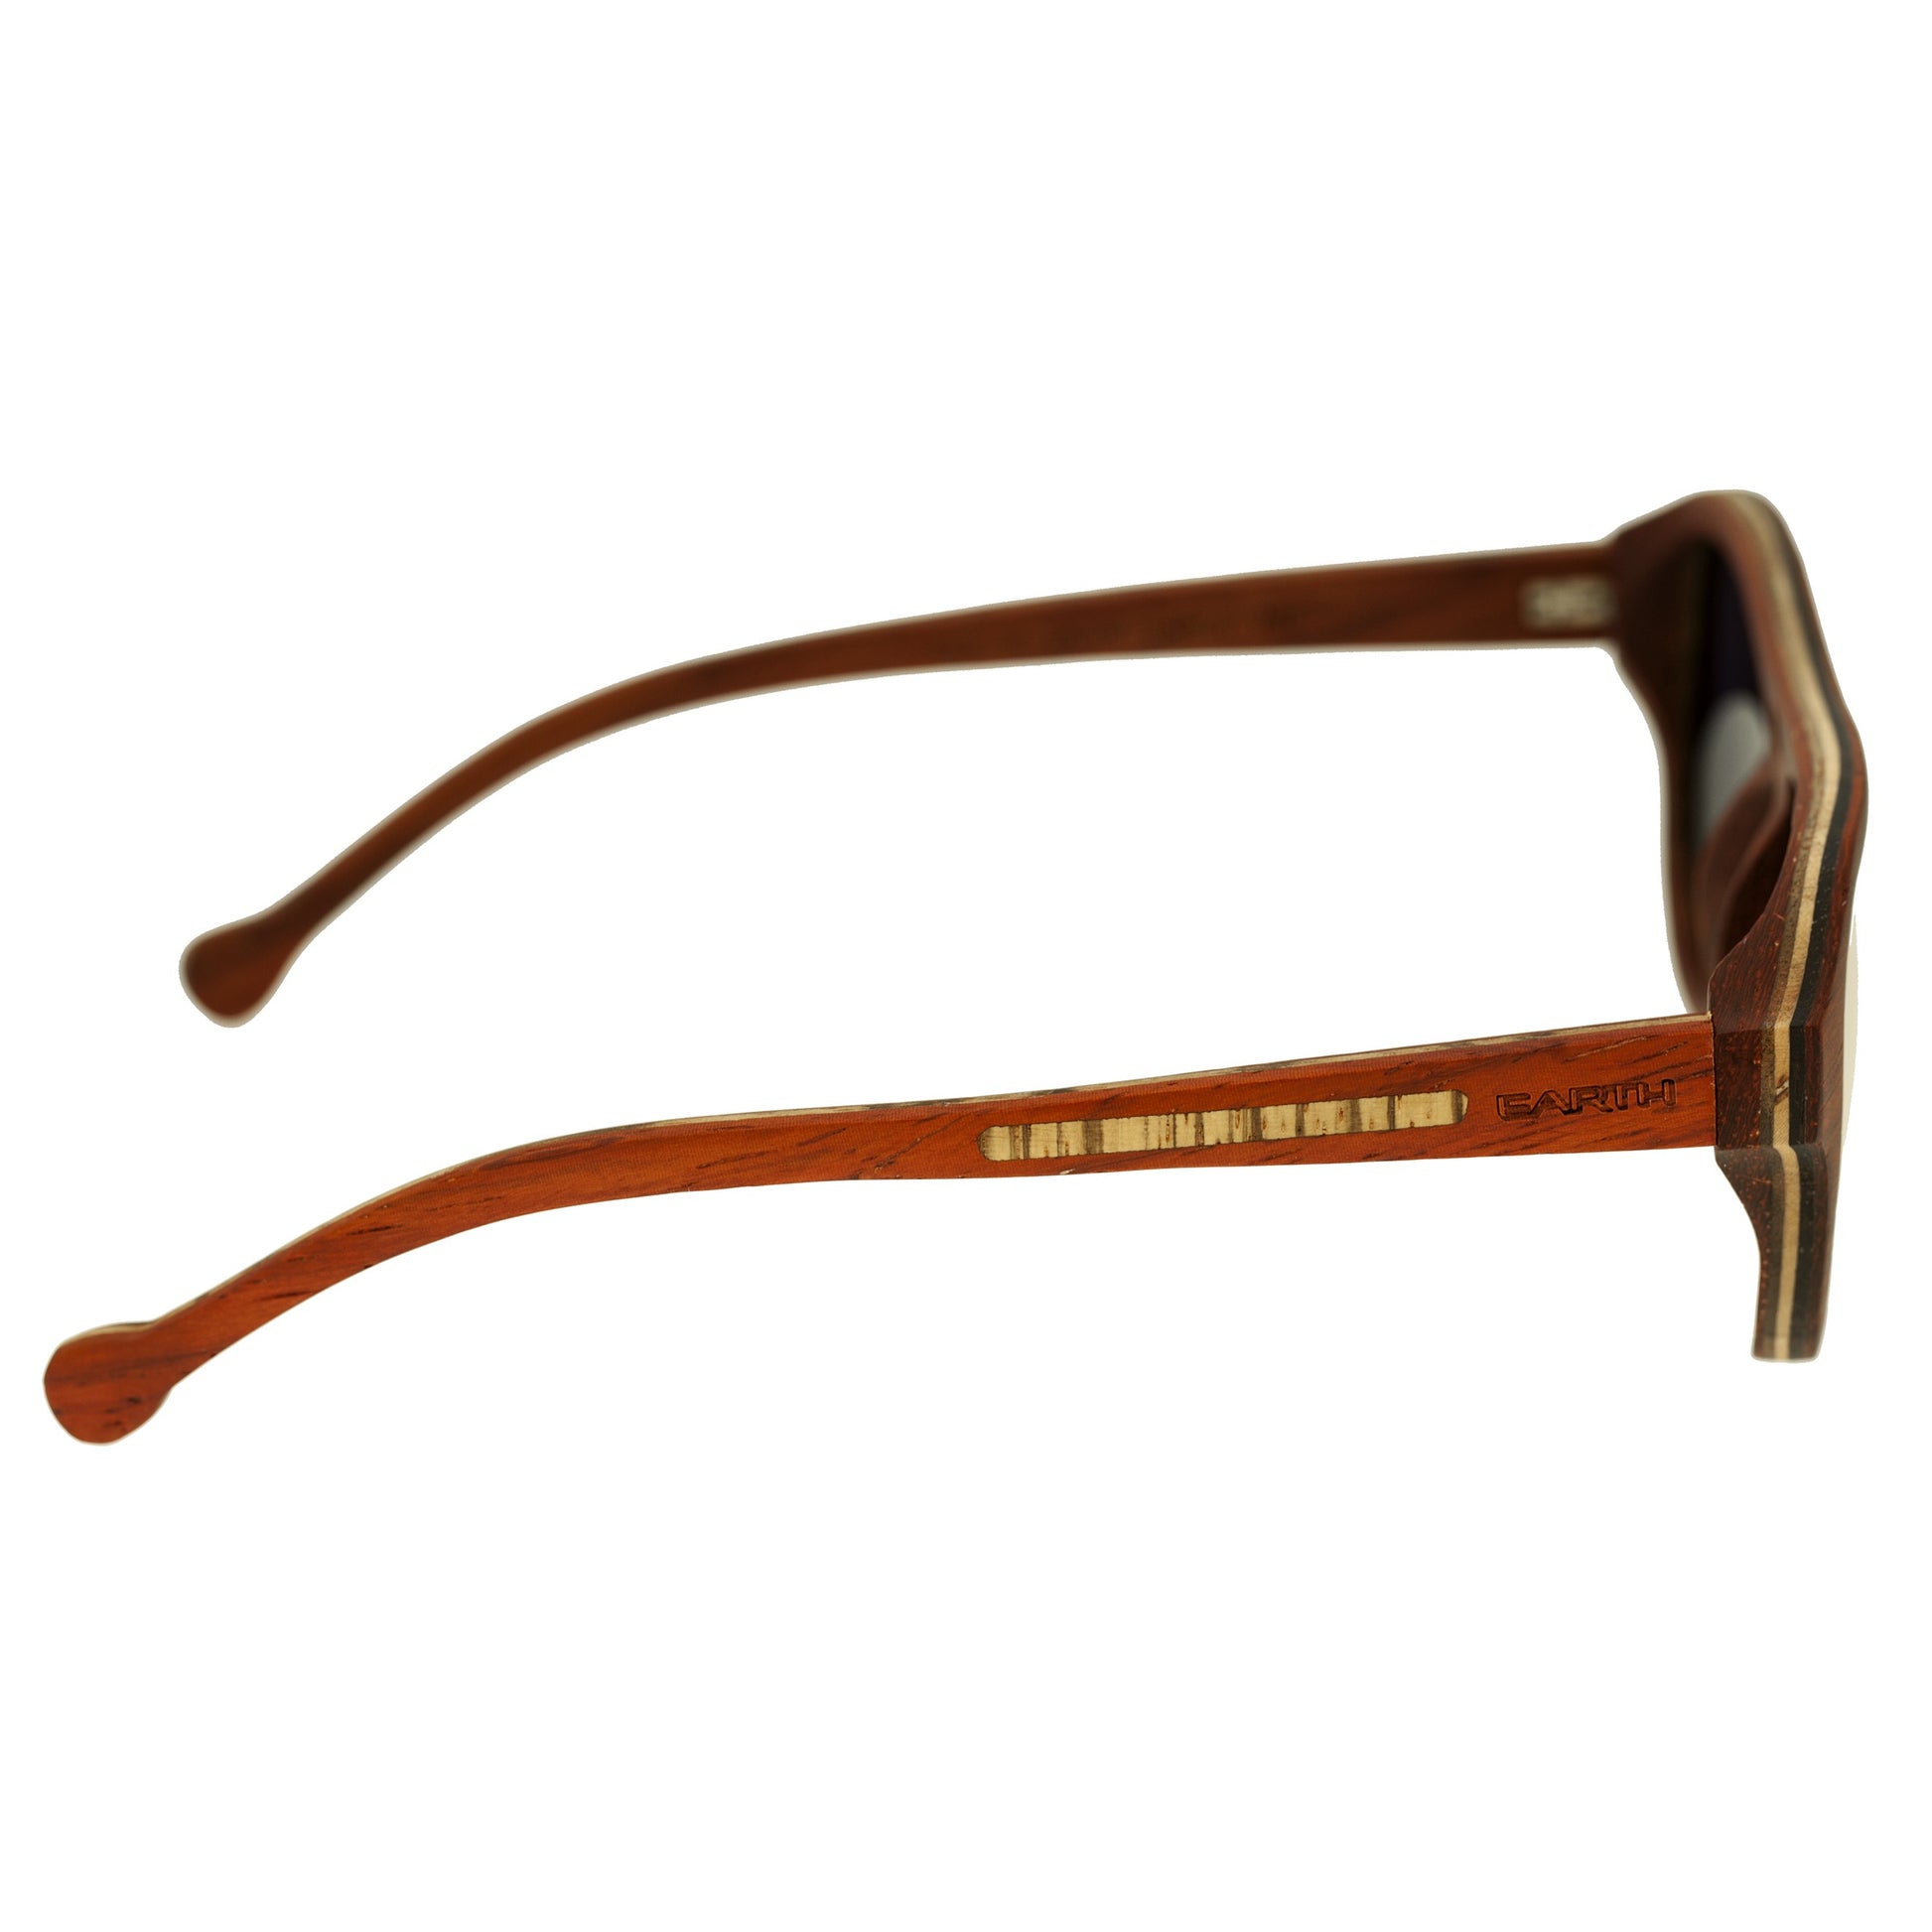 Earth Wood Clearwater Polarized Sunglasses - Zebra Rosewood/Yellow - ESG046RZ